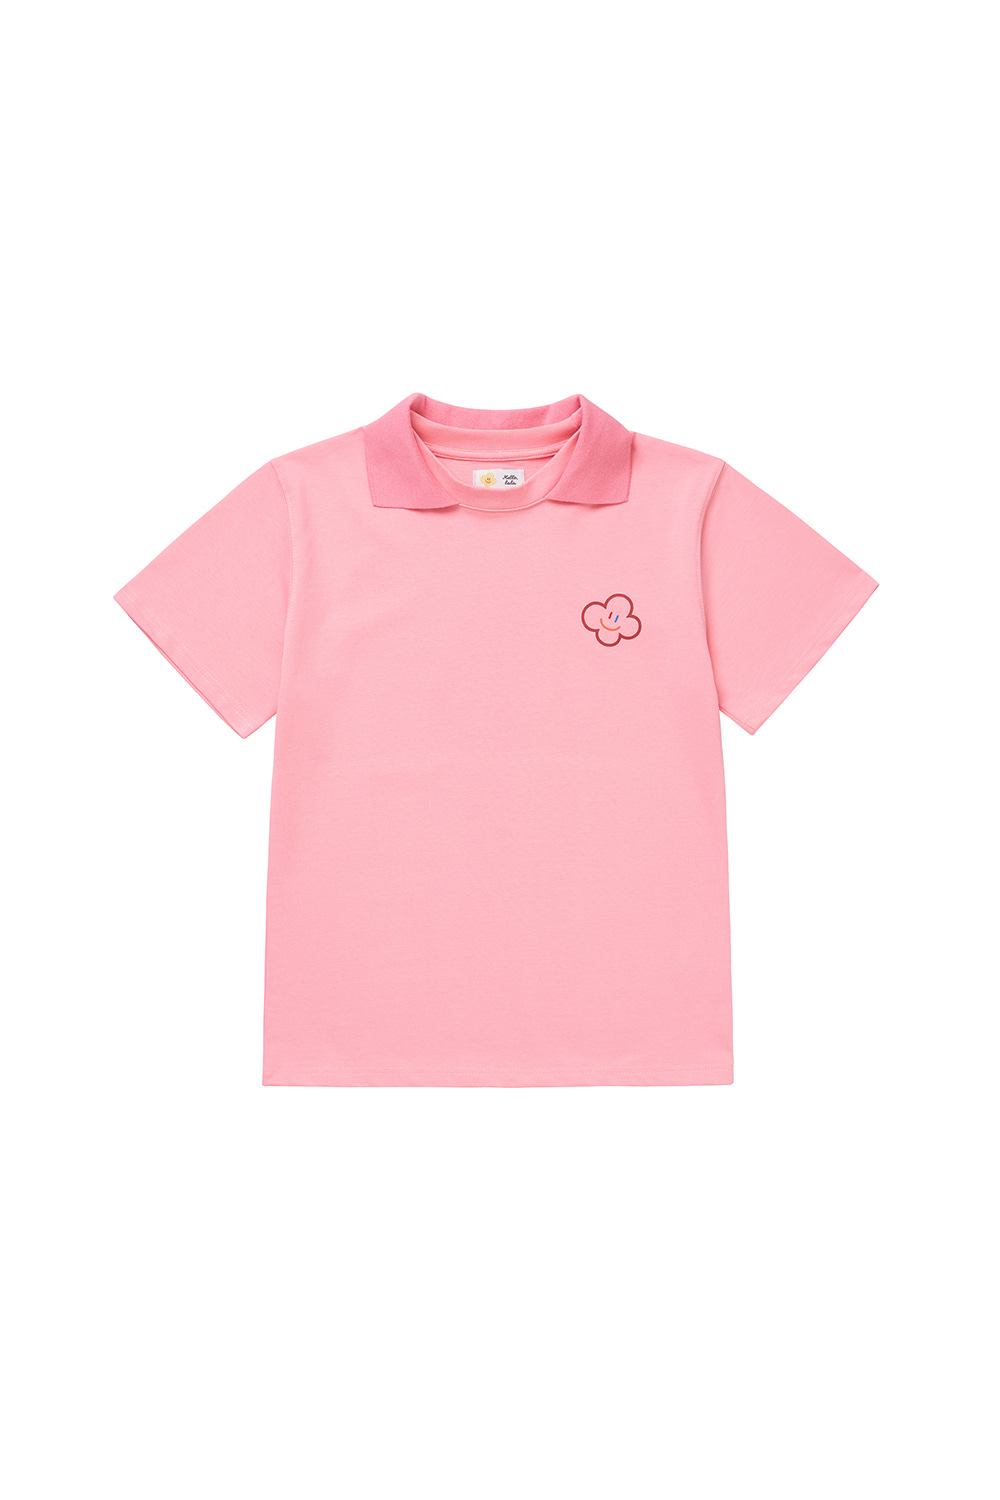 Hello LaLa New PK T-Shirts [Pink]